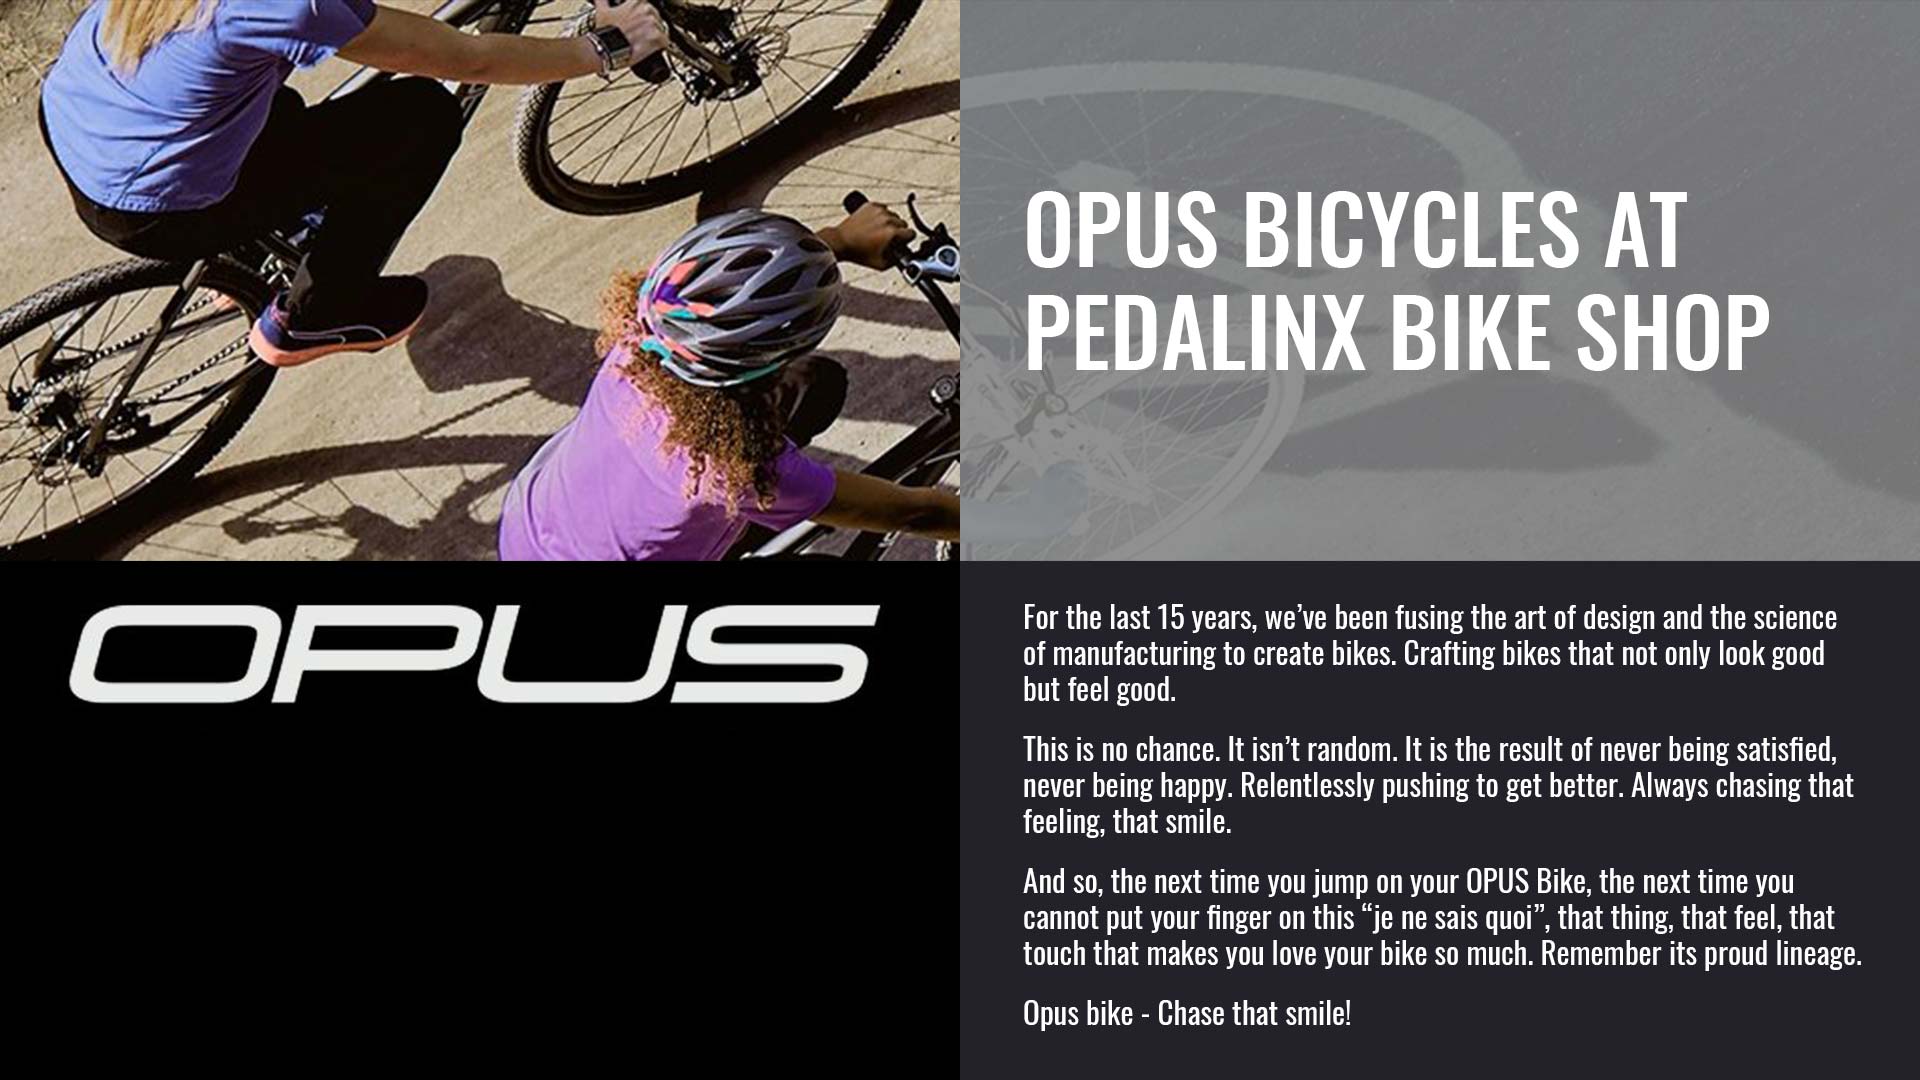 Opus Bicycles